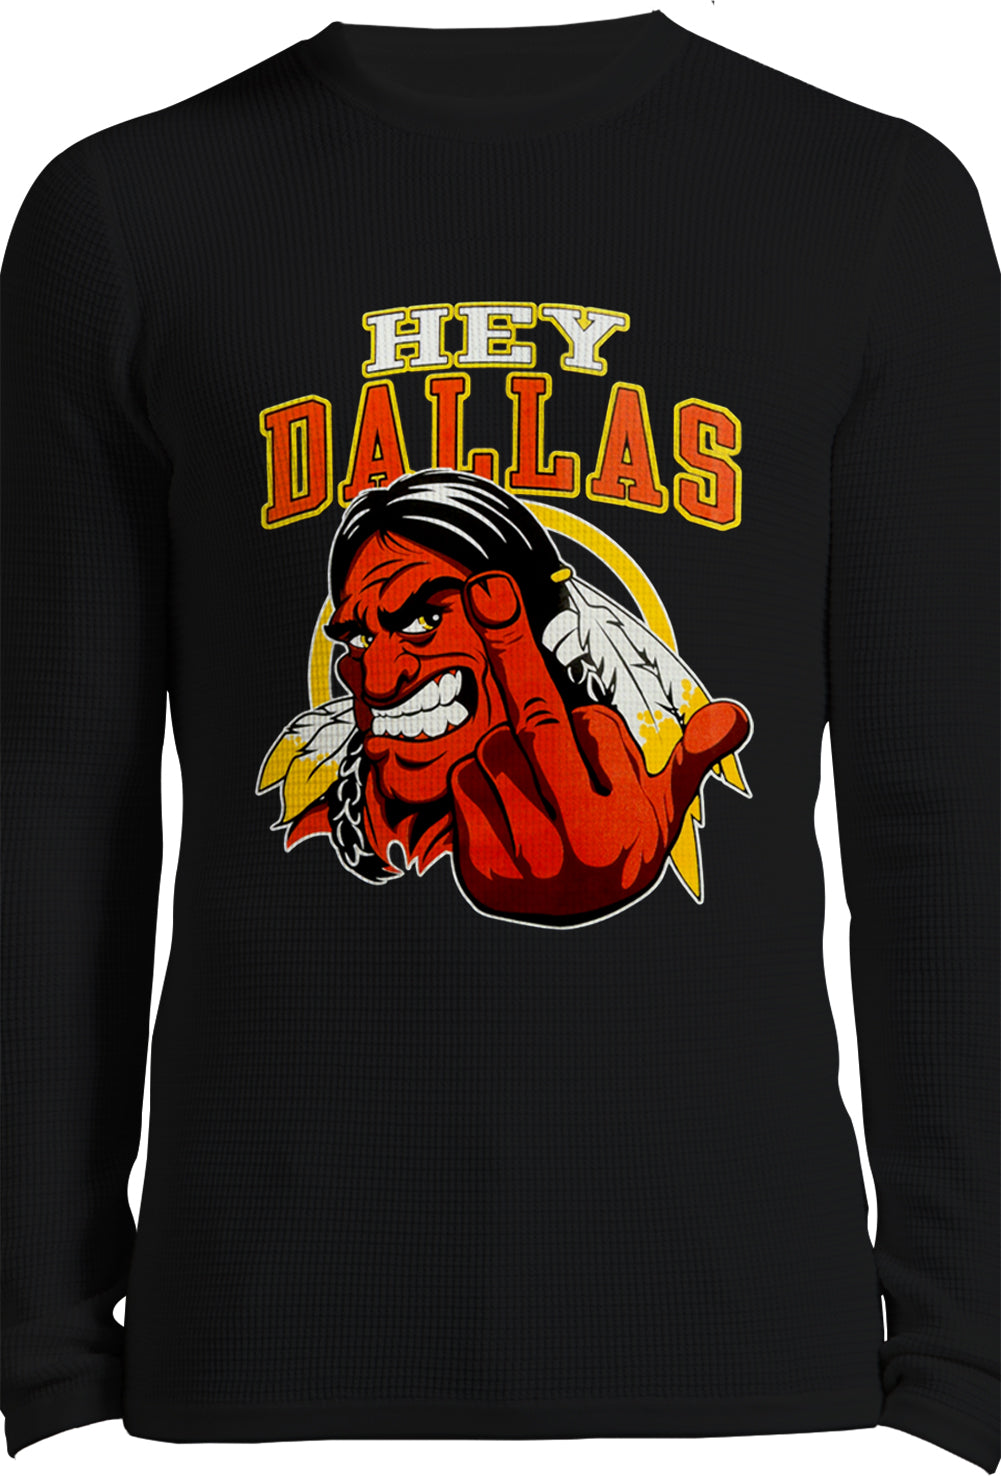 Washington Fan - Hey Dallas Thermal Long Sleeve Shirt